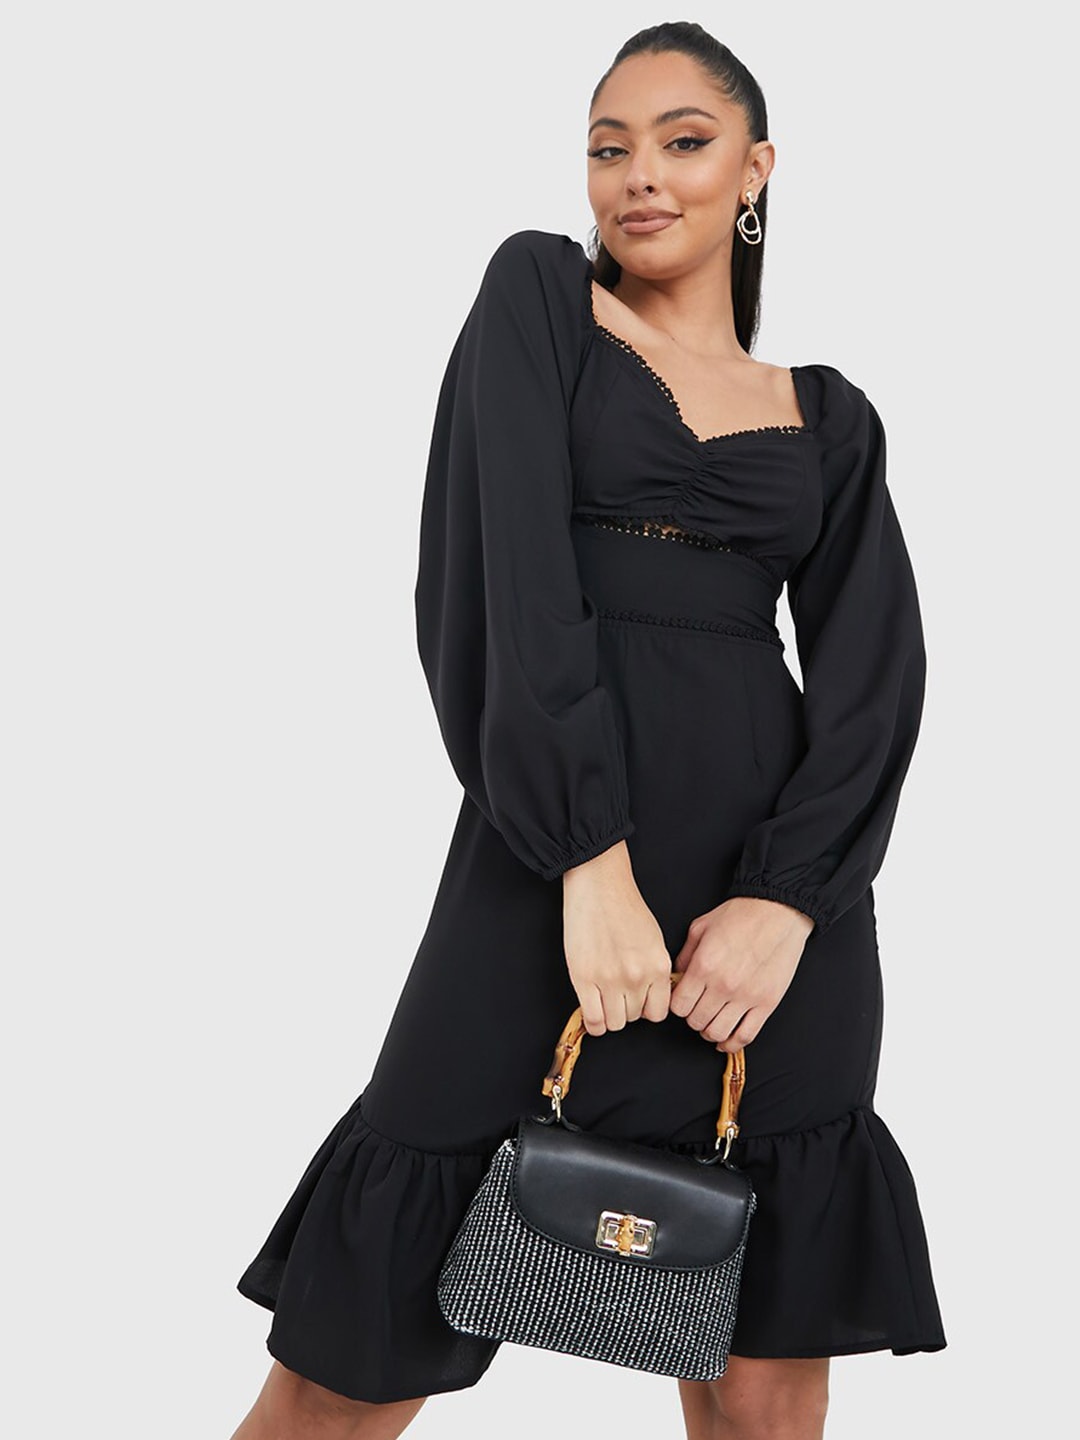 Styli Black Long Puff Sleeves Sweetheart Neck Flounce Sheath Dress Price in India